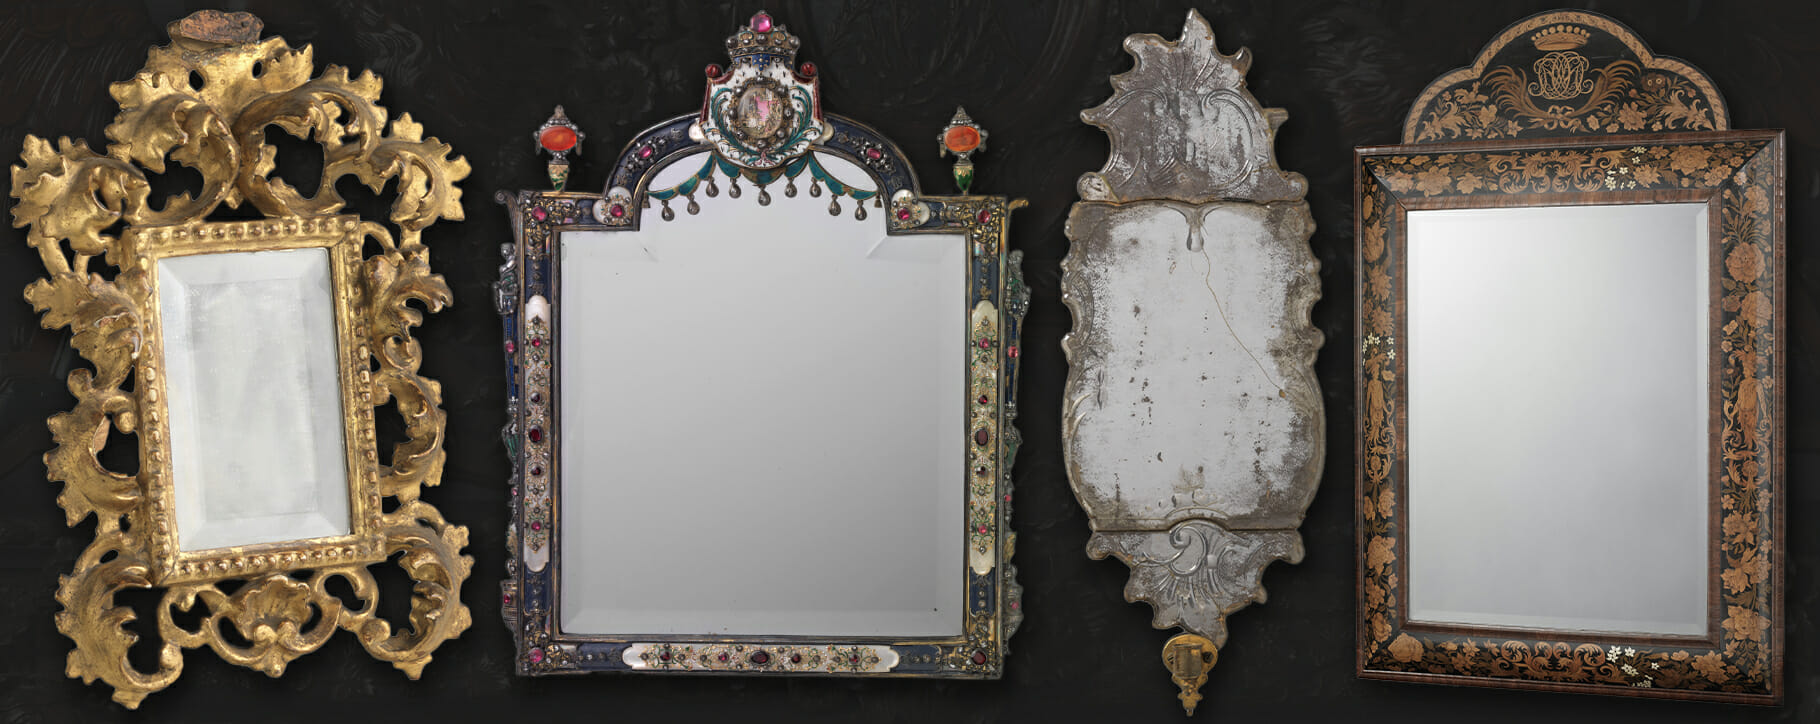 17th century mirror examples